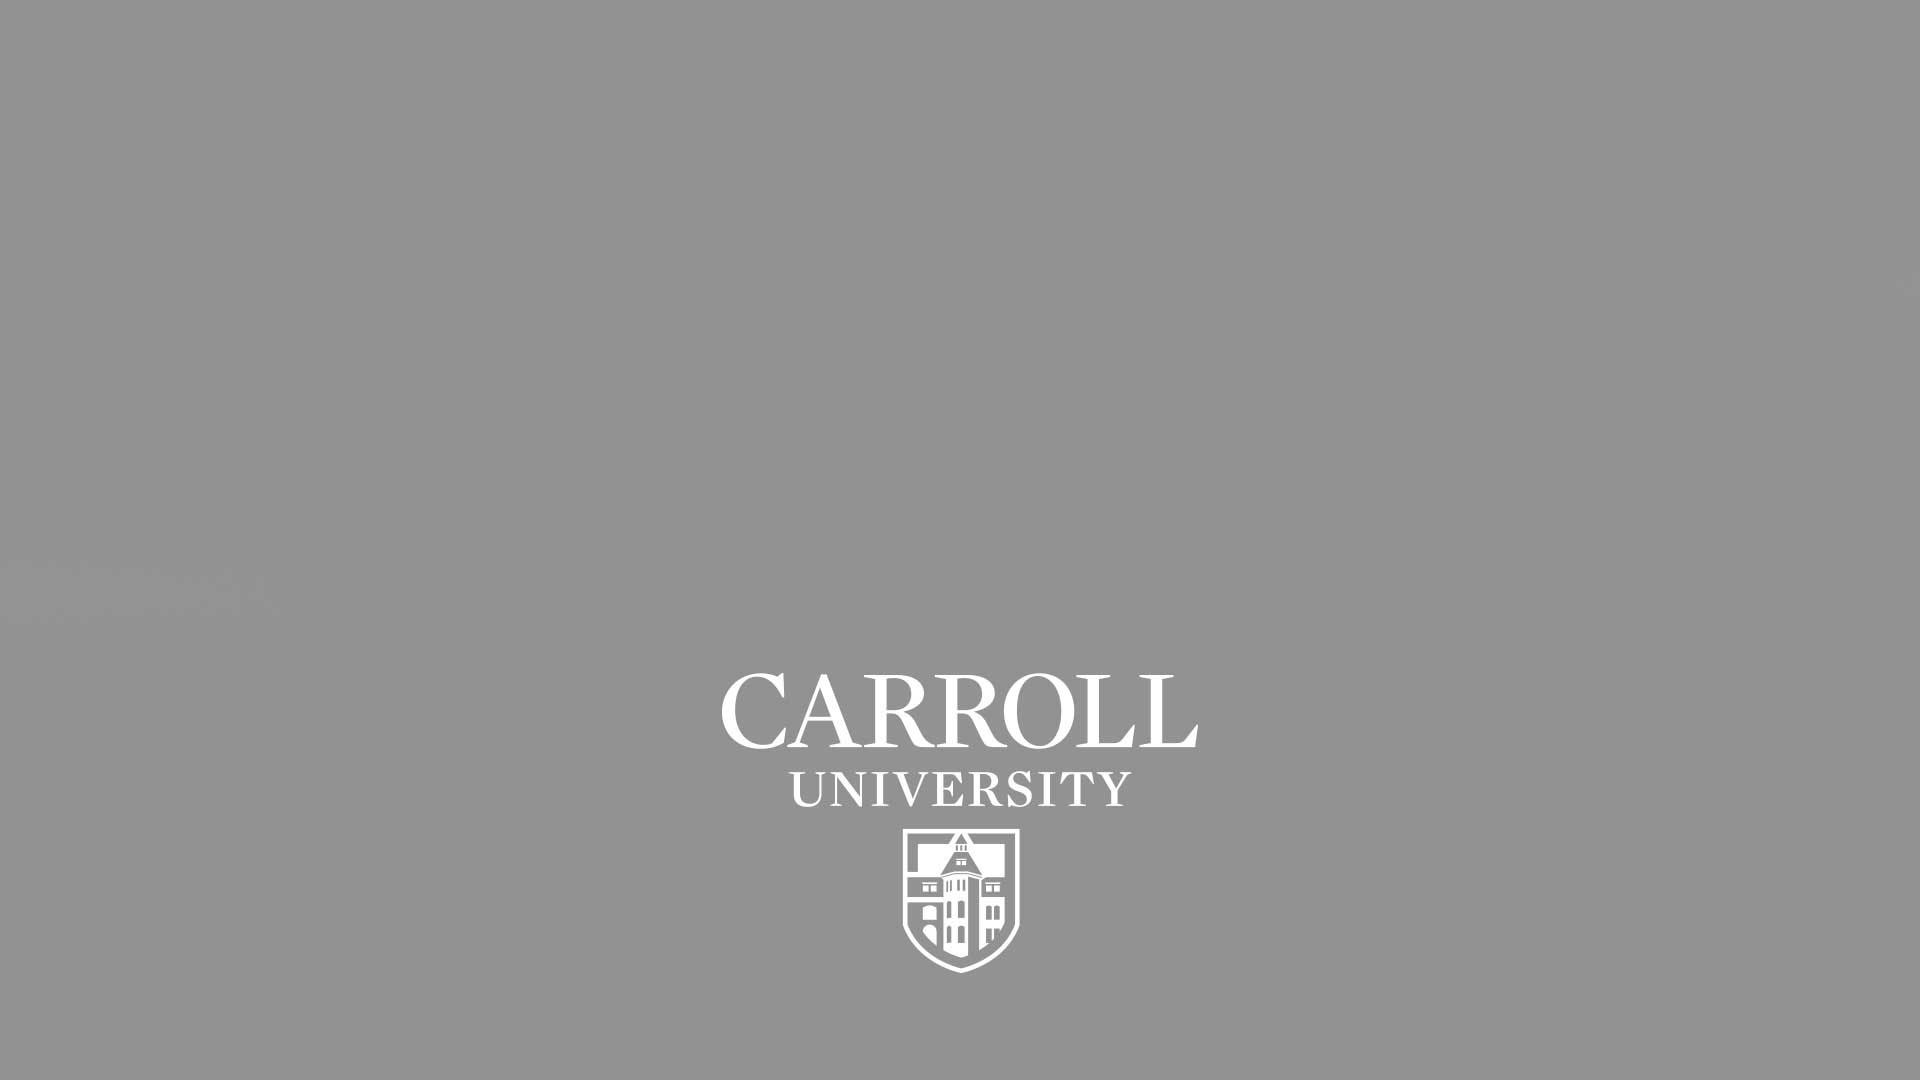 Carroll University logo with gray background